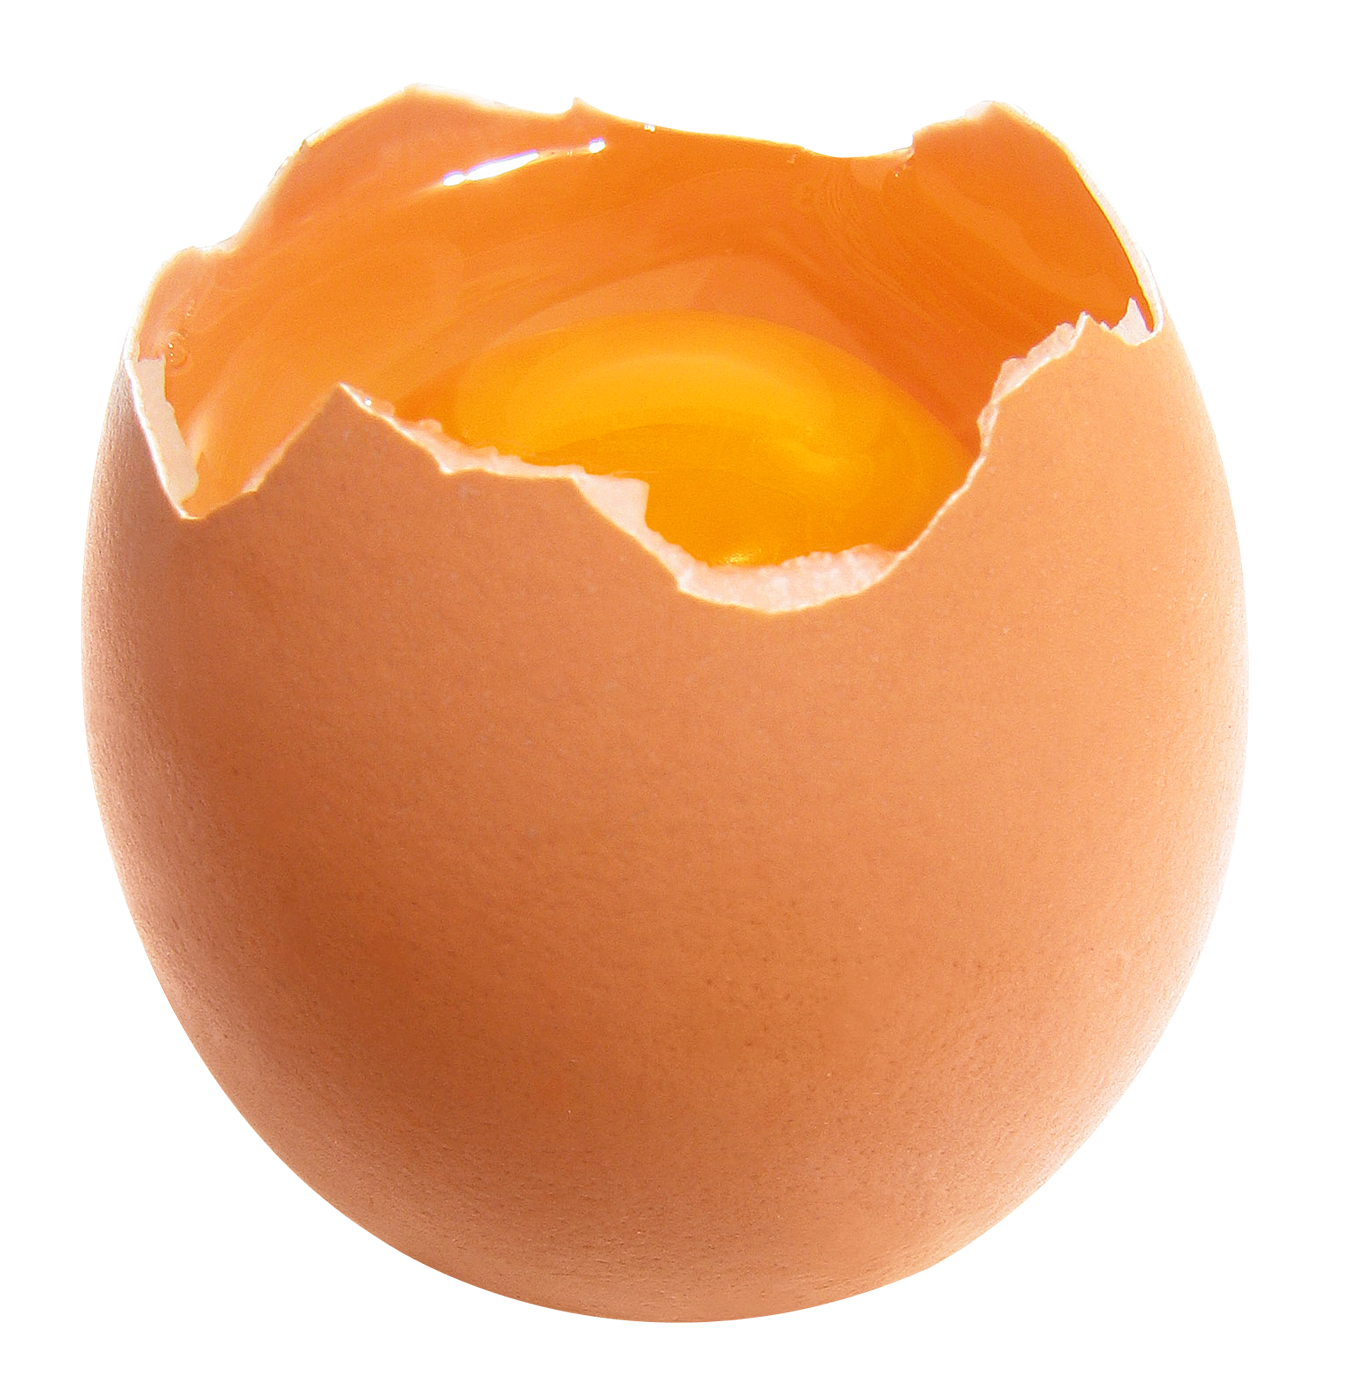 Kırılmış yumurta